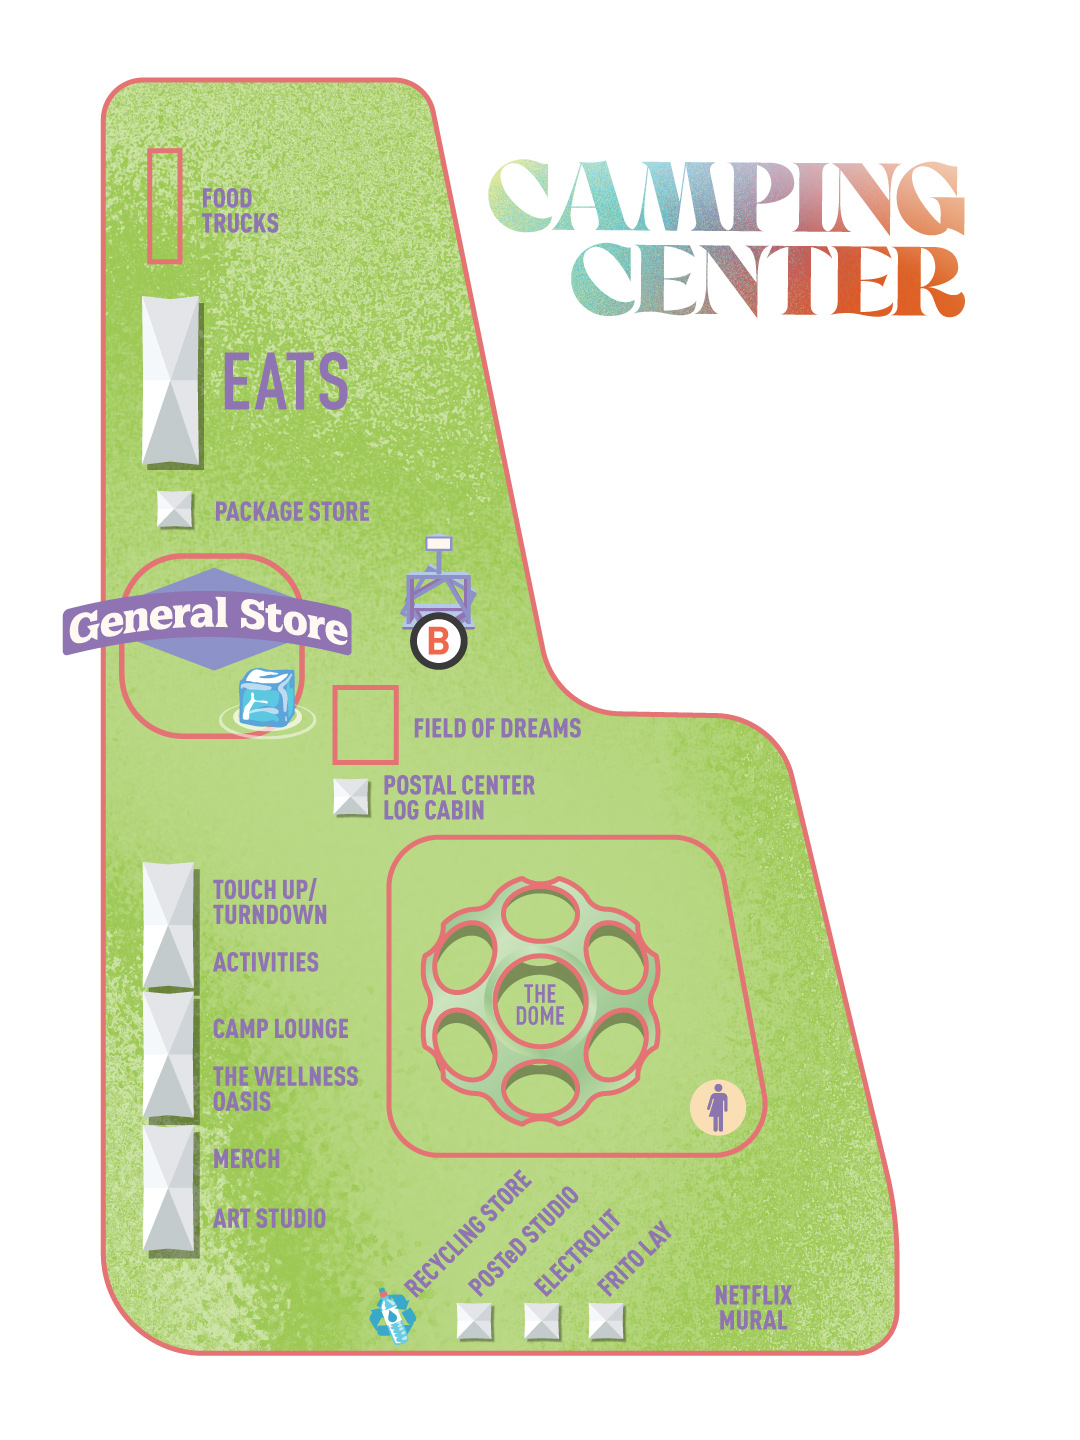 Coachella Center Map